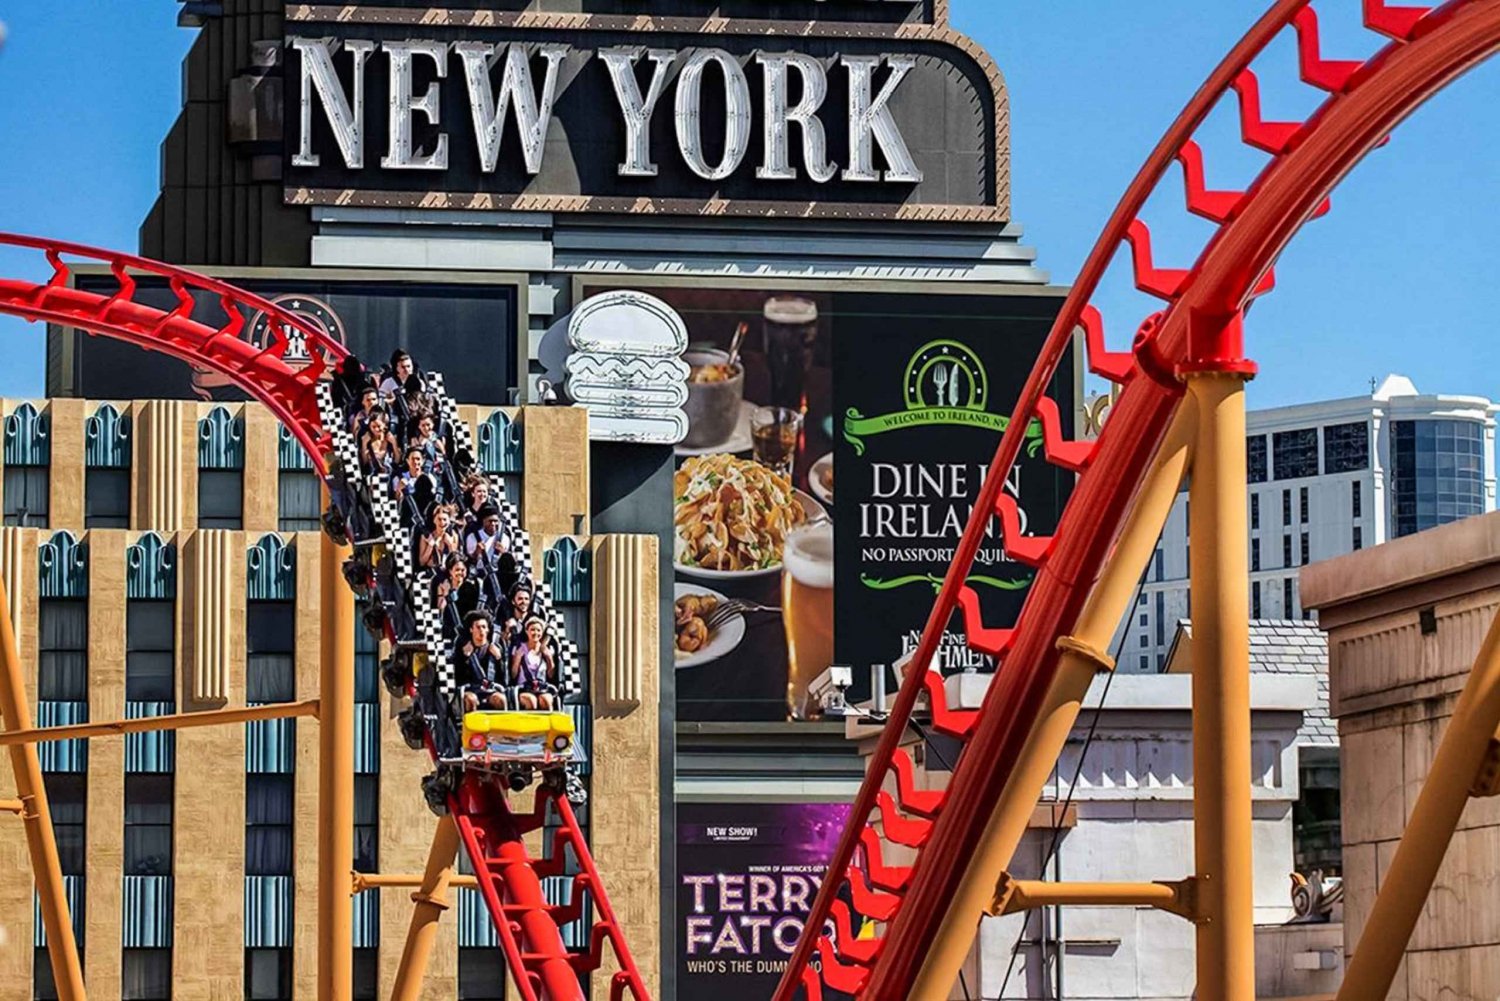 Las Vegas: New York-New York Hotel Big Apple Coaster Ride